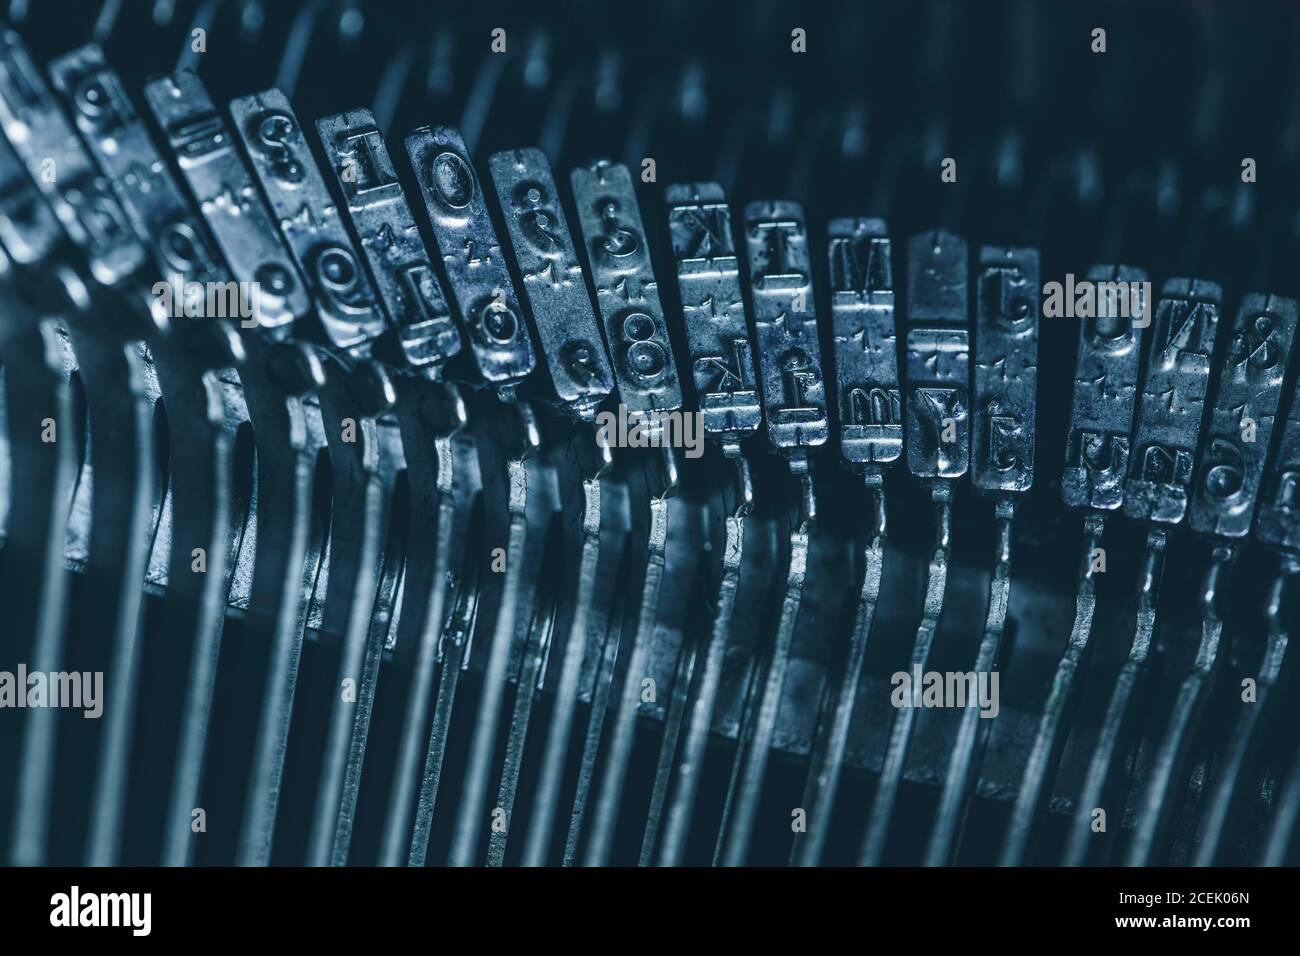 Close-up metal typebar of mechanical typewriter with Western script Stock Photo